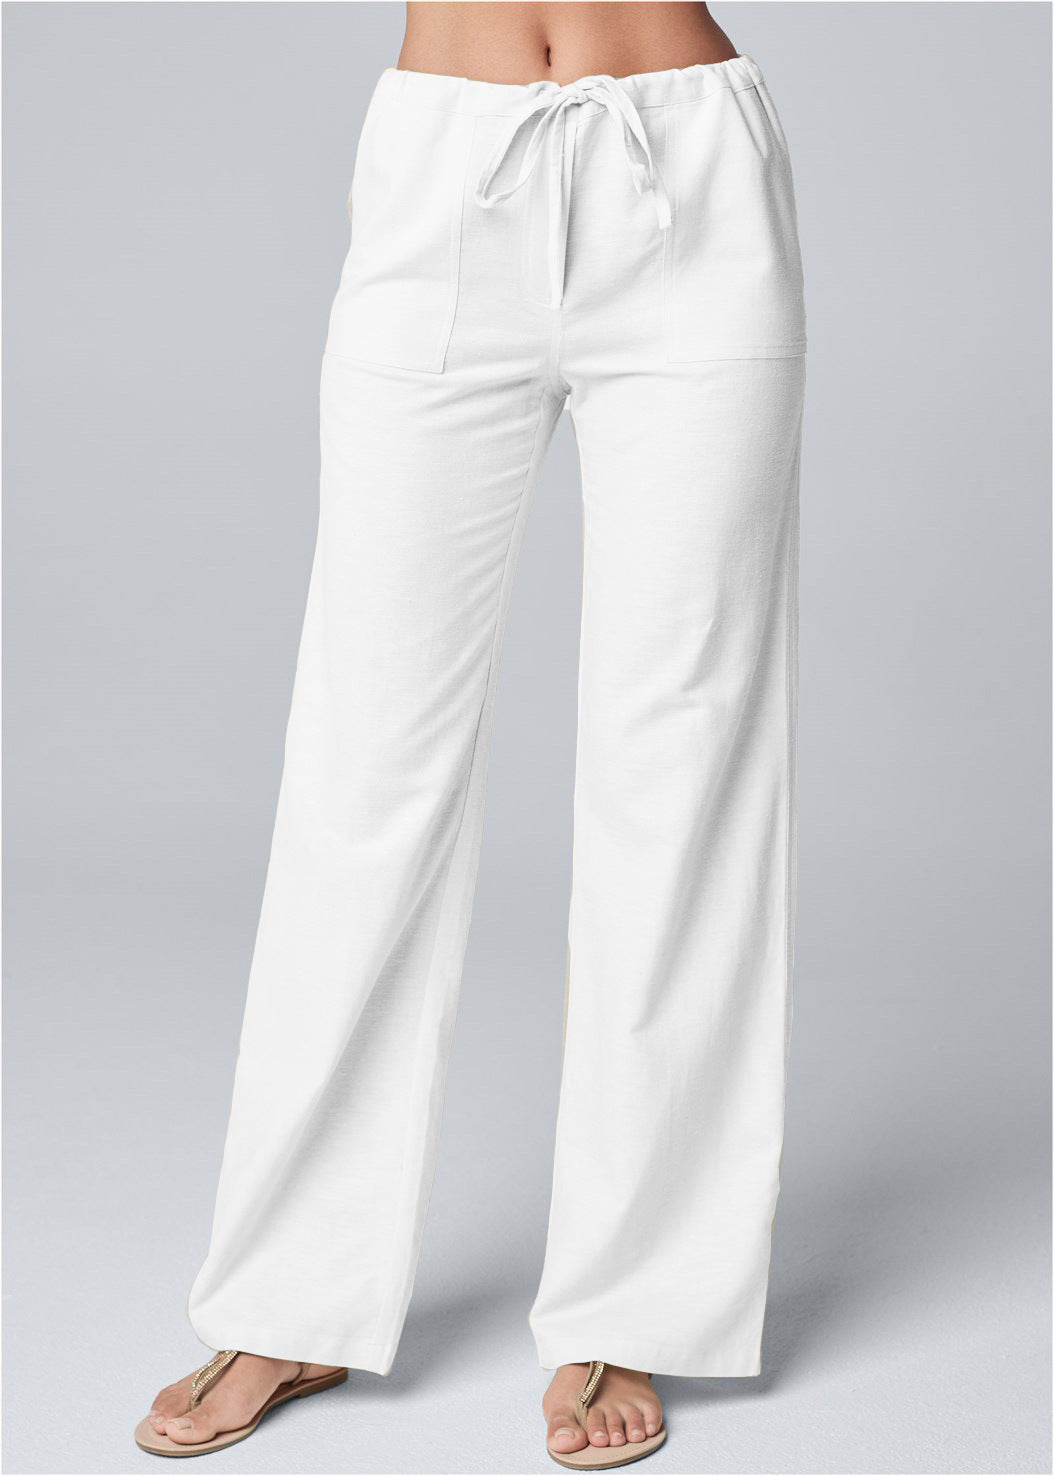 Pants  | Women's Fashion Solid Color Loose Lace-up Cotton And Linen Straight-leg Pants | White |  2XL| thecurvestory.myshopify.com